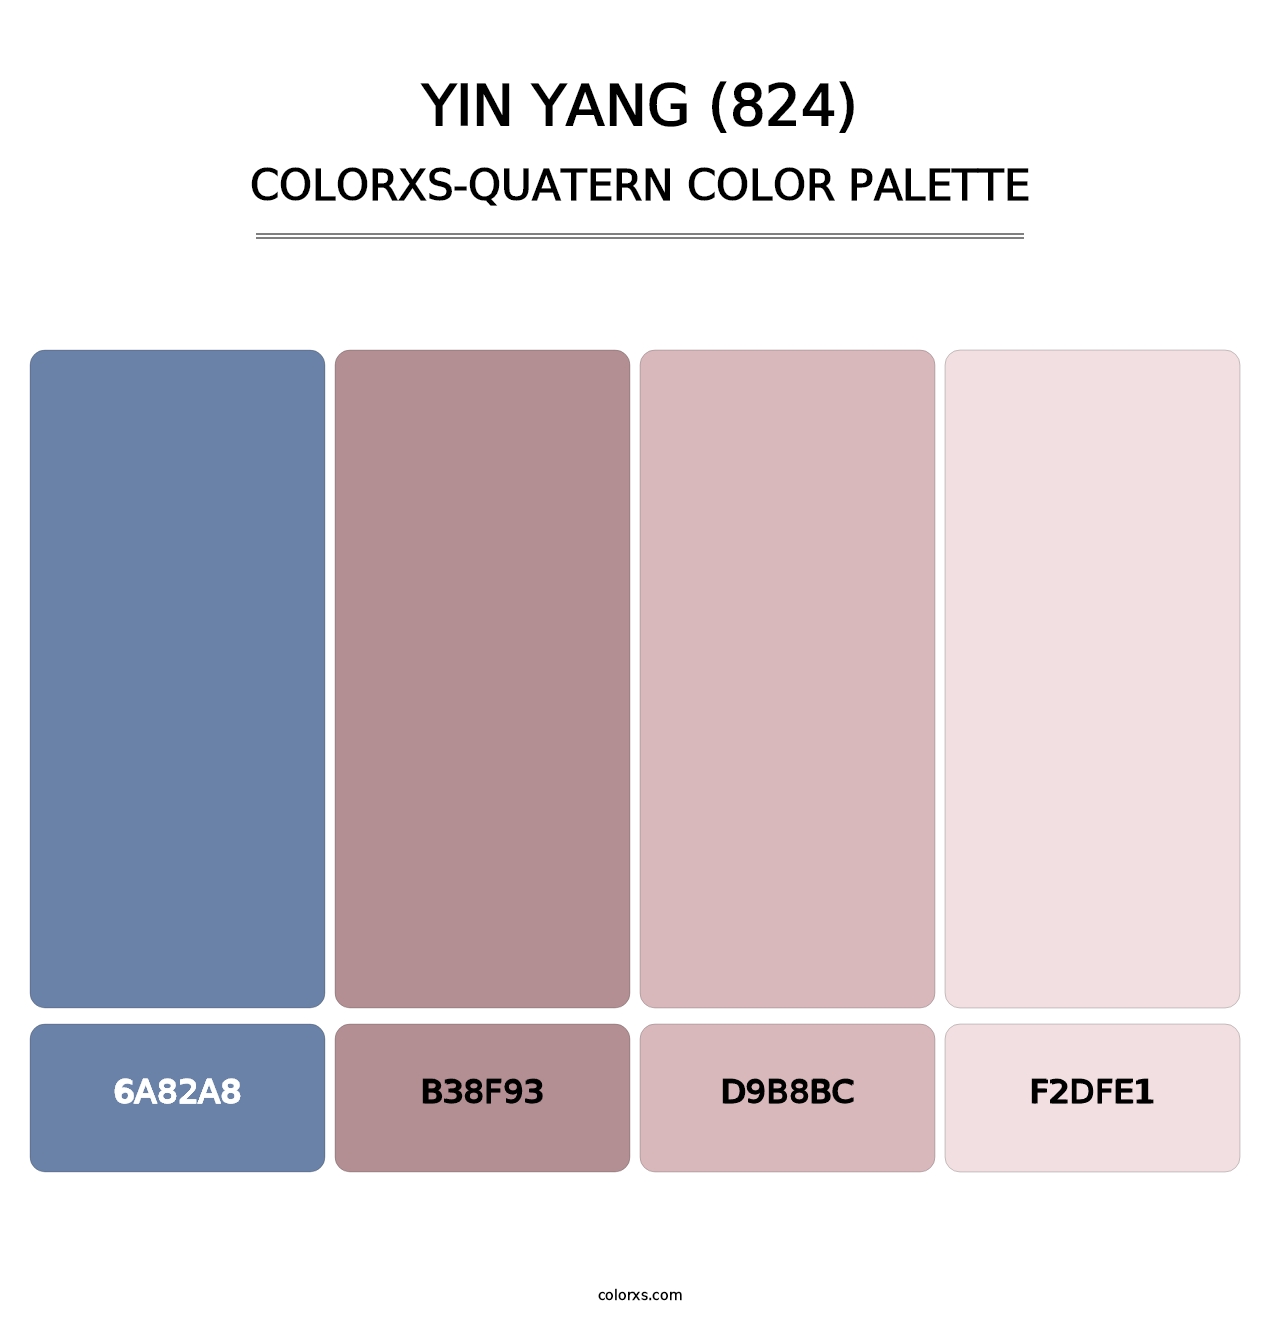 Yin Yang (824) - Colorxs Quatern Palette